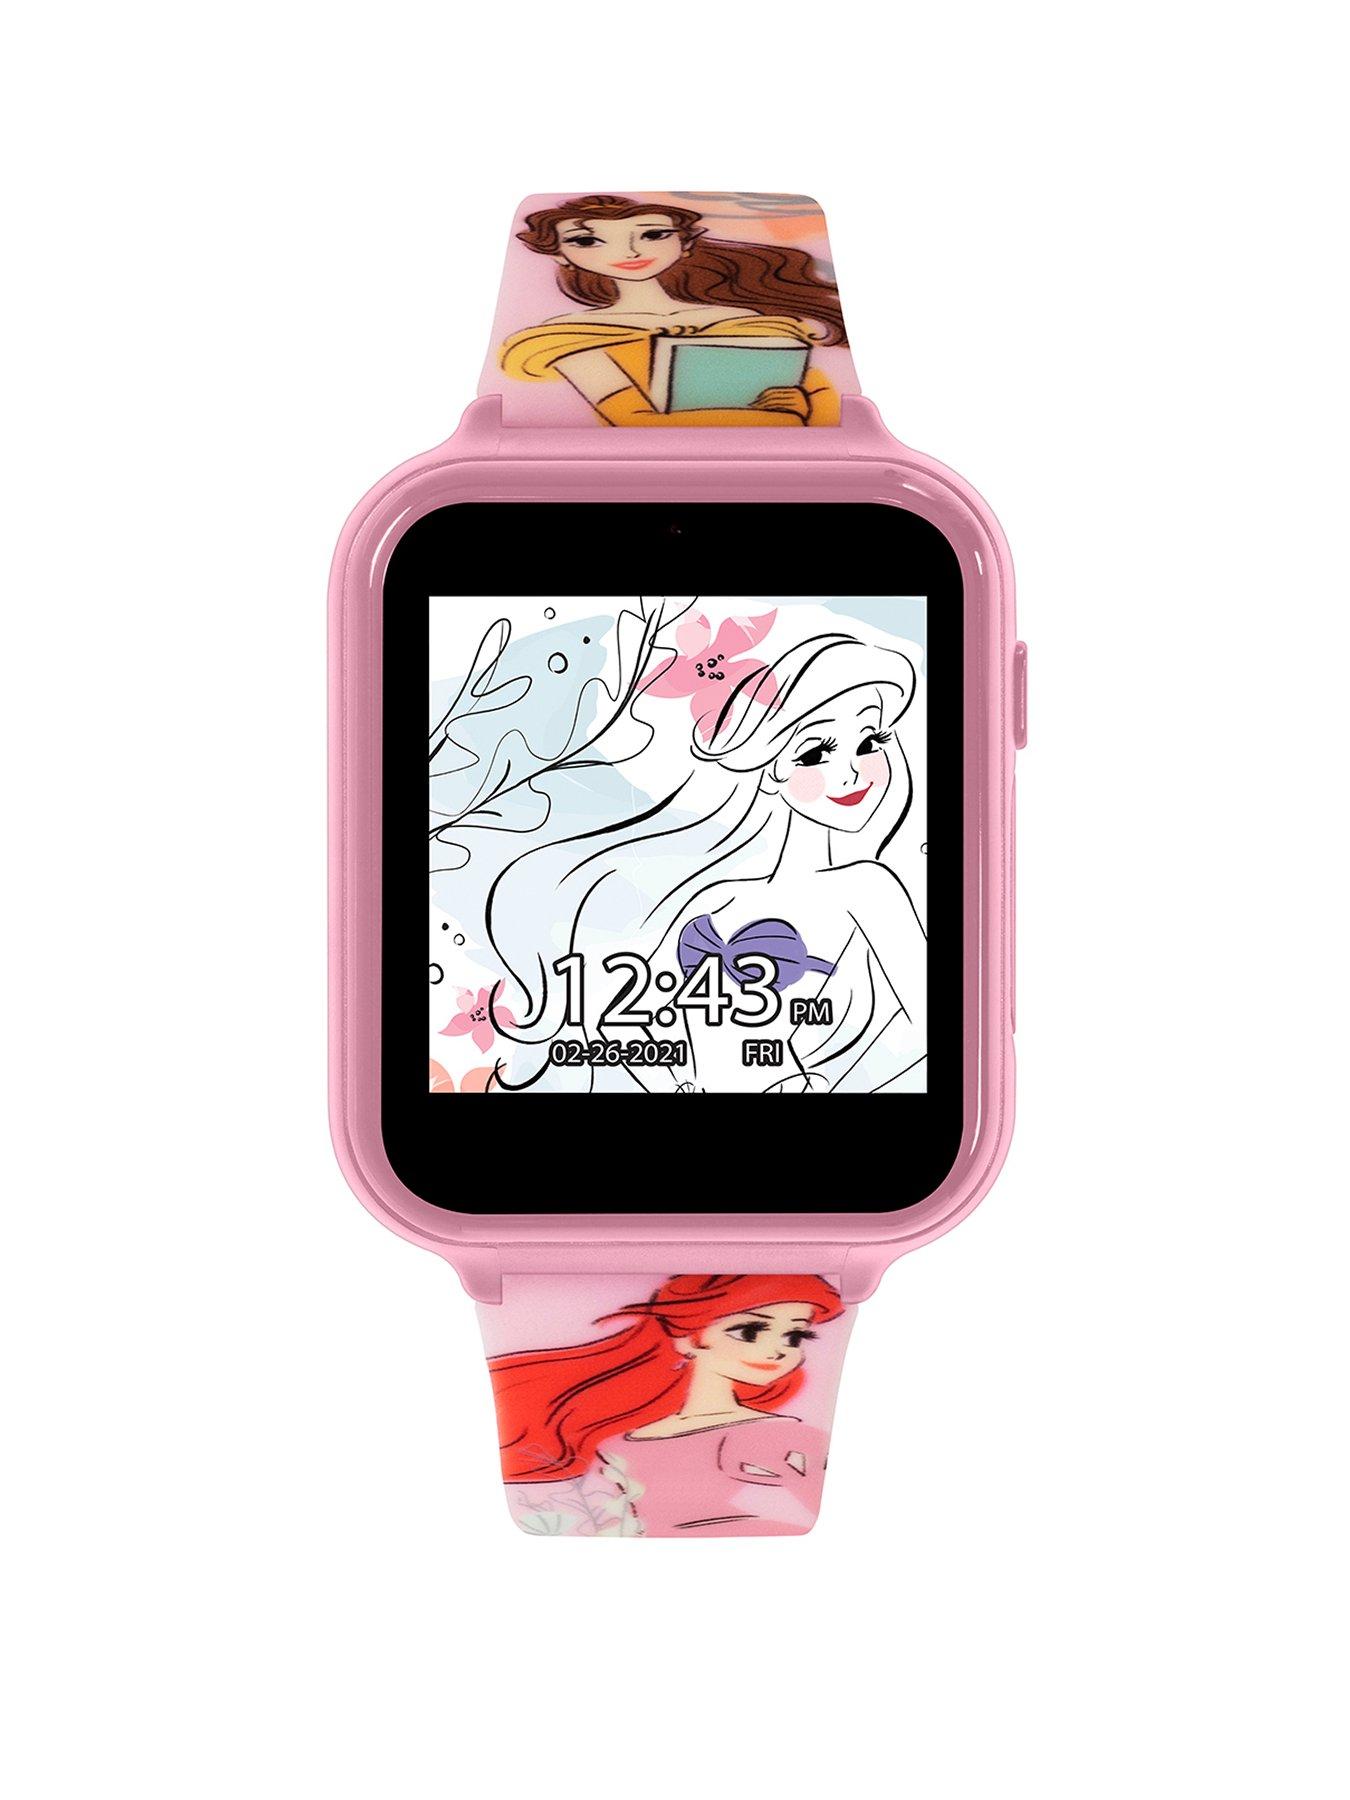  Disney Princess Watch Kids Girls Smart Watch